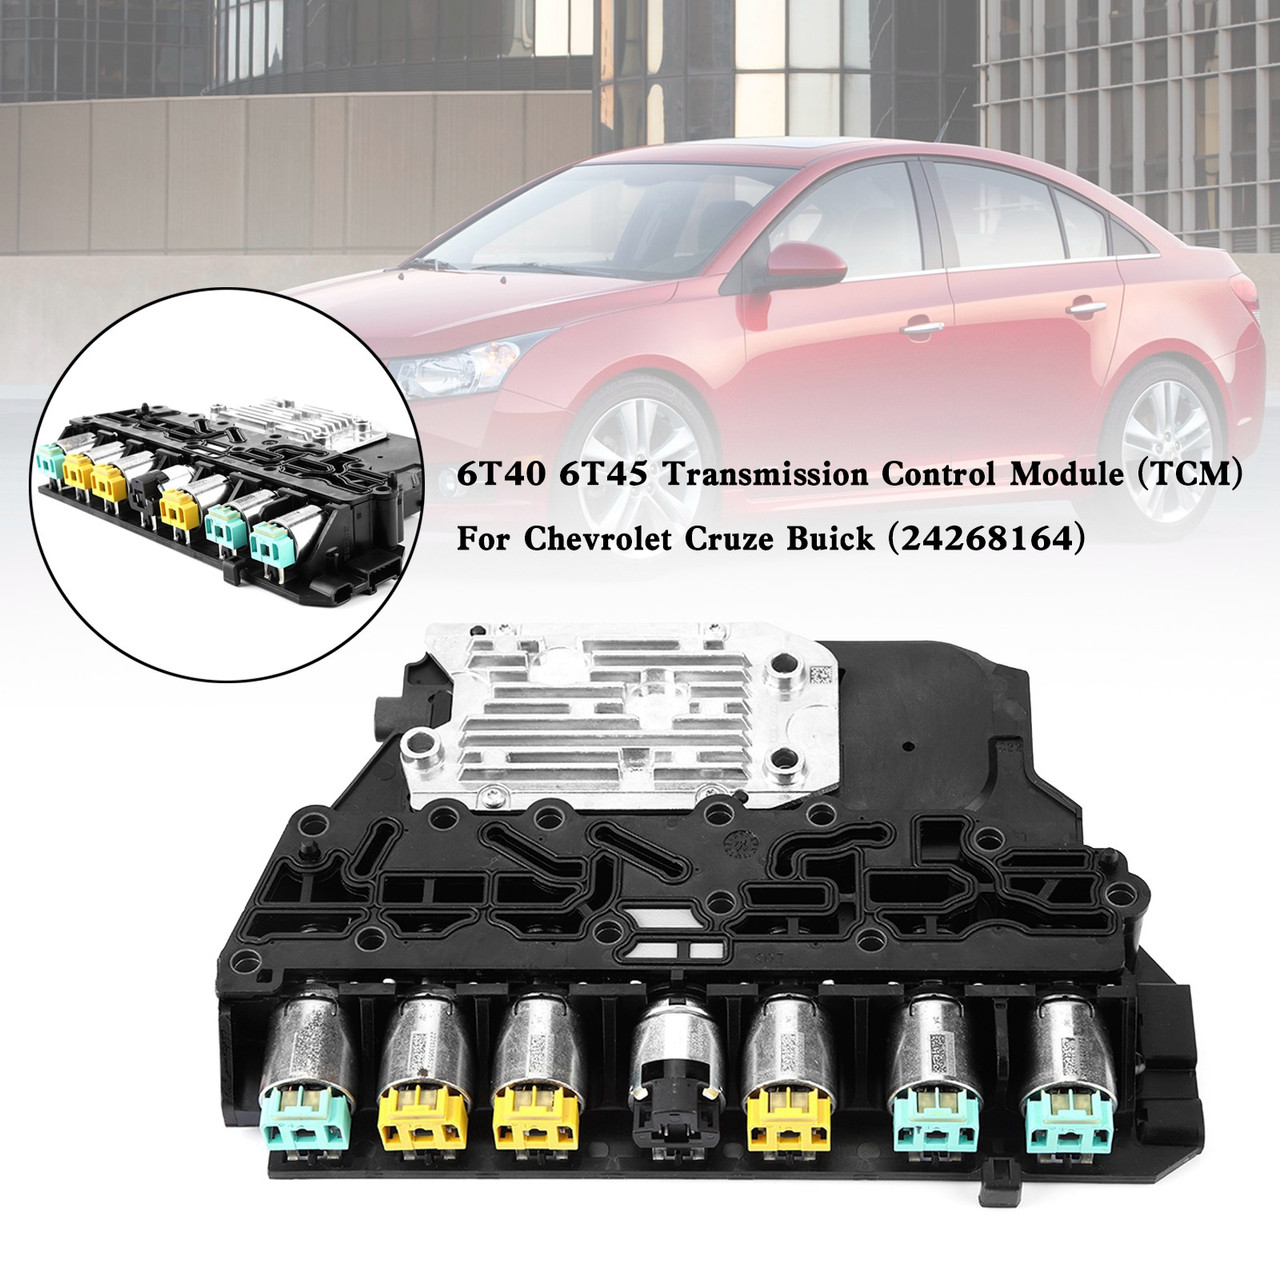 2014-2017 GMC TERRAIN 6T40 6T45 Transmission Control Module (TCM)